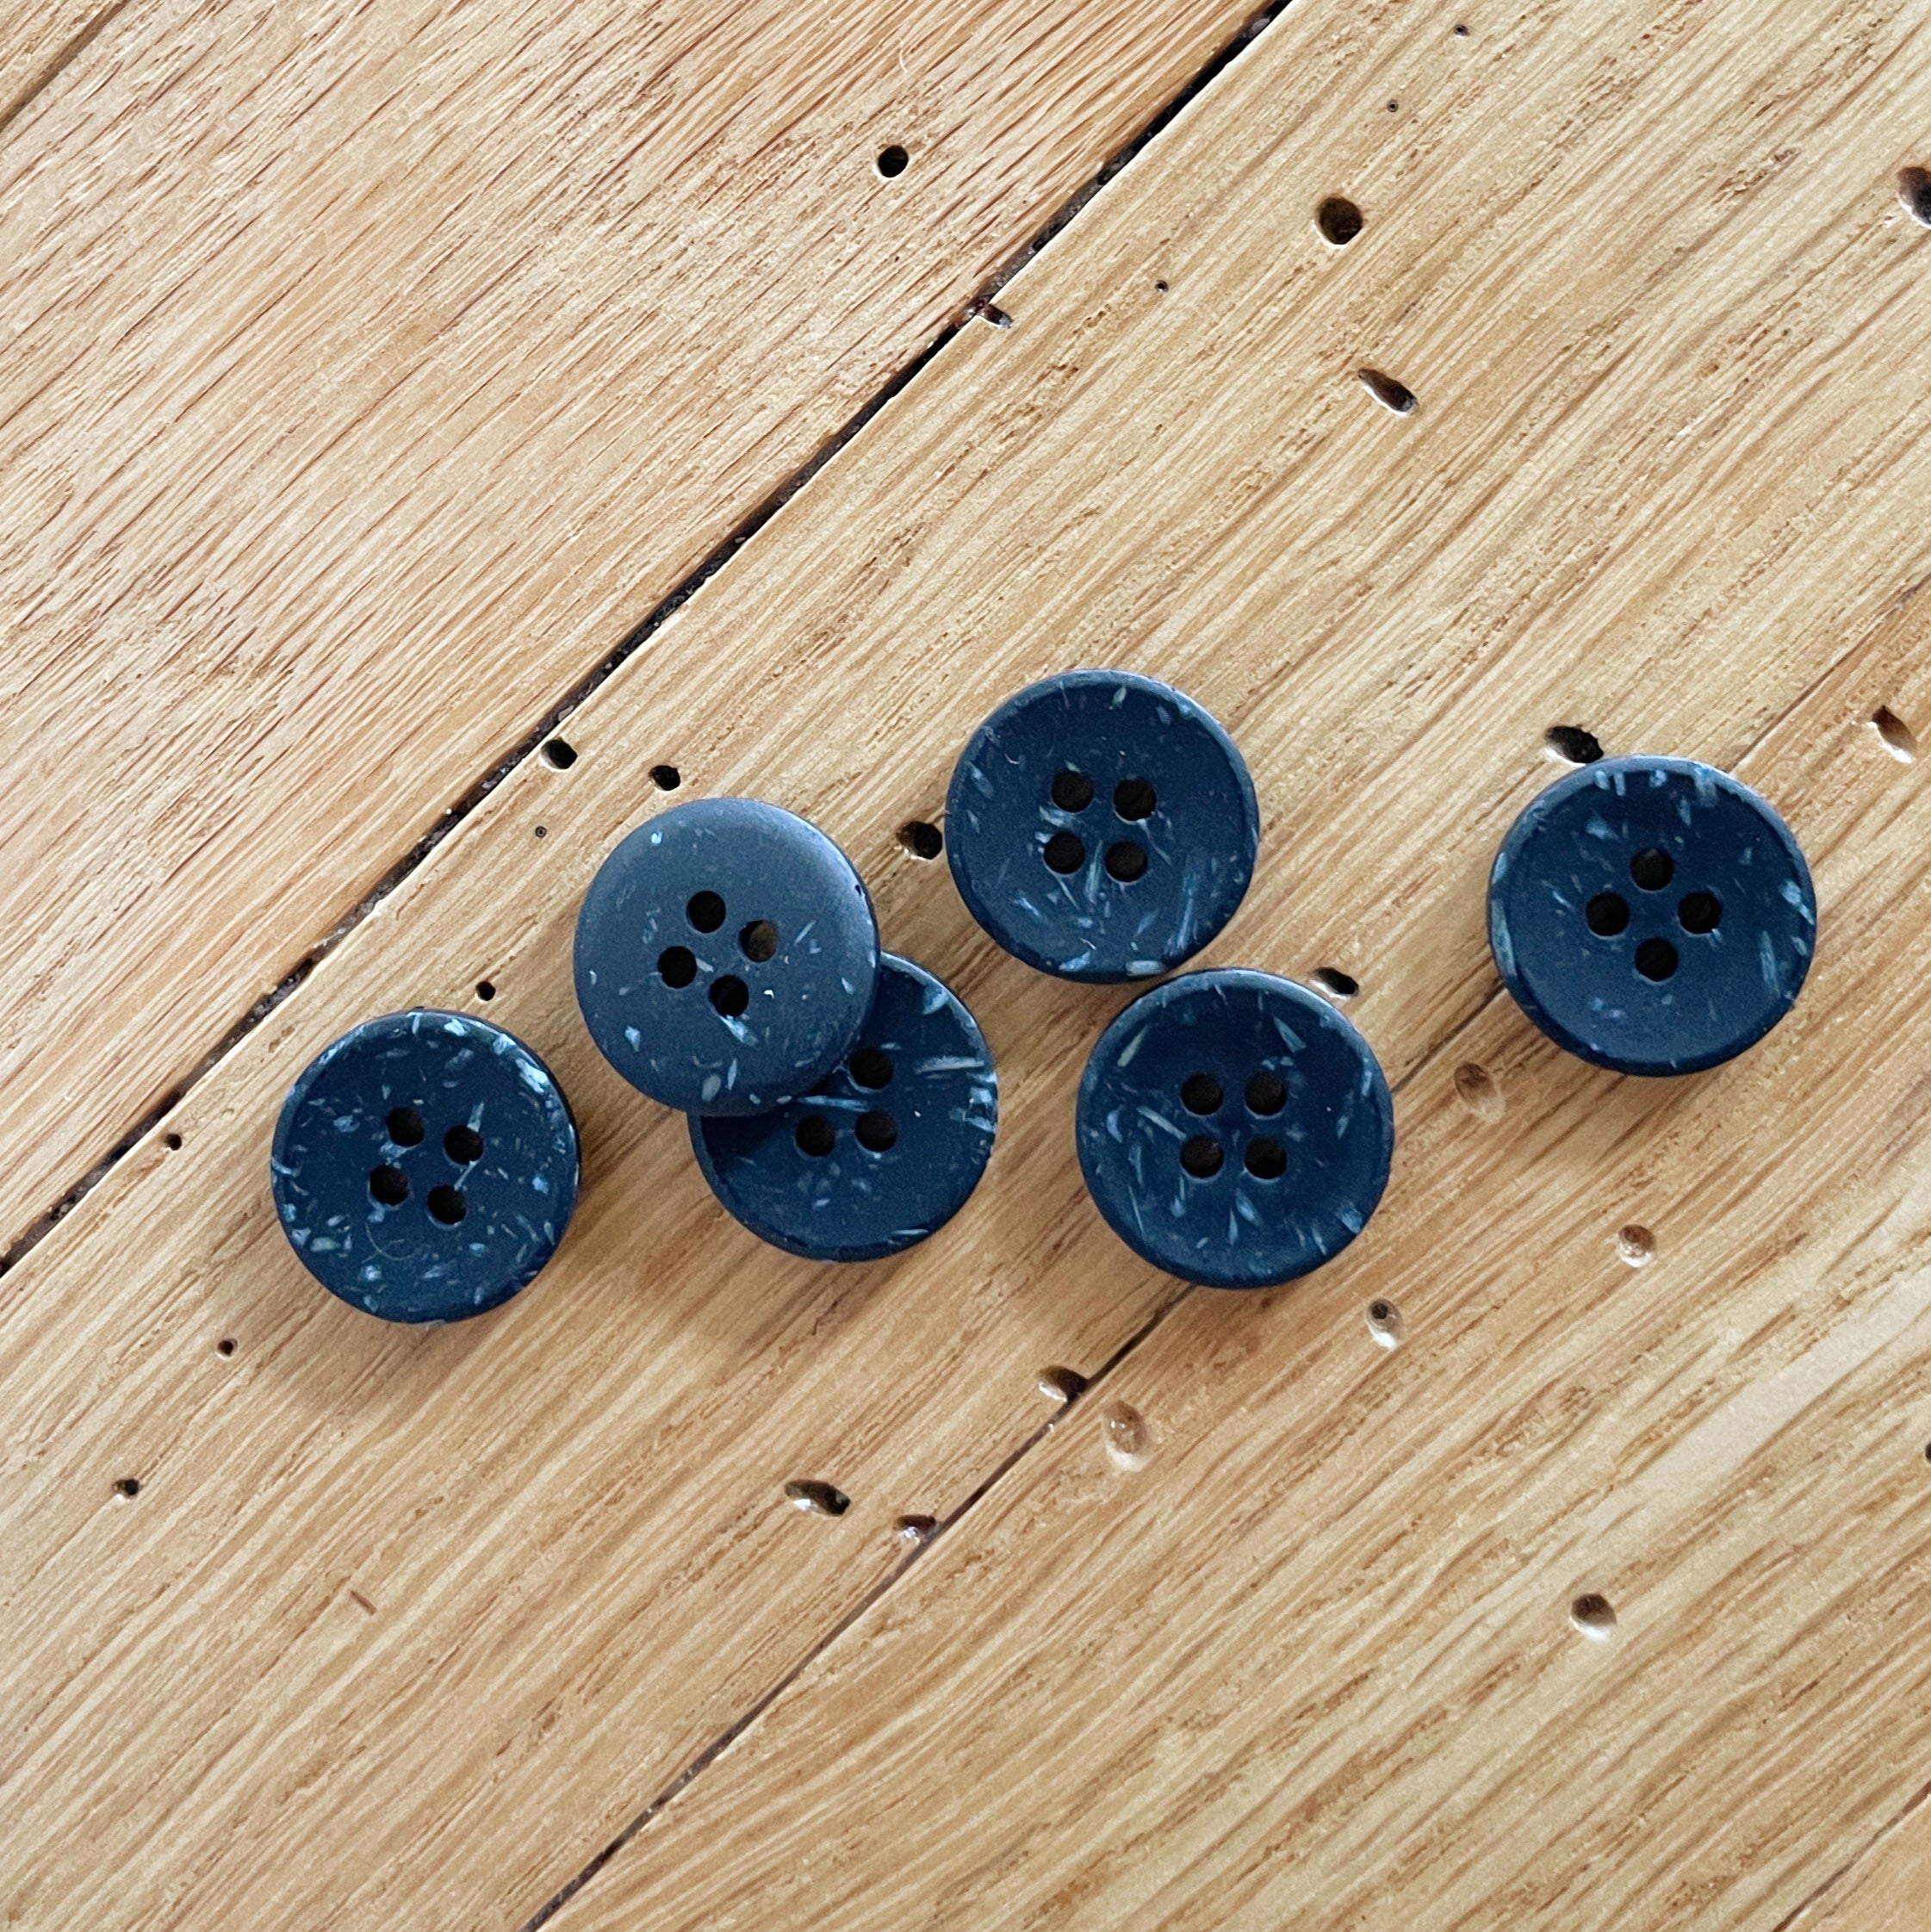 Buttons 4 Hole, 1/2 Inch, Resin, 10 Pieces, Blue - Seeking Roam